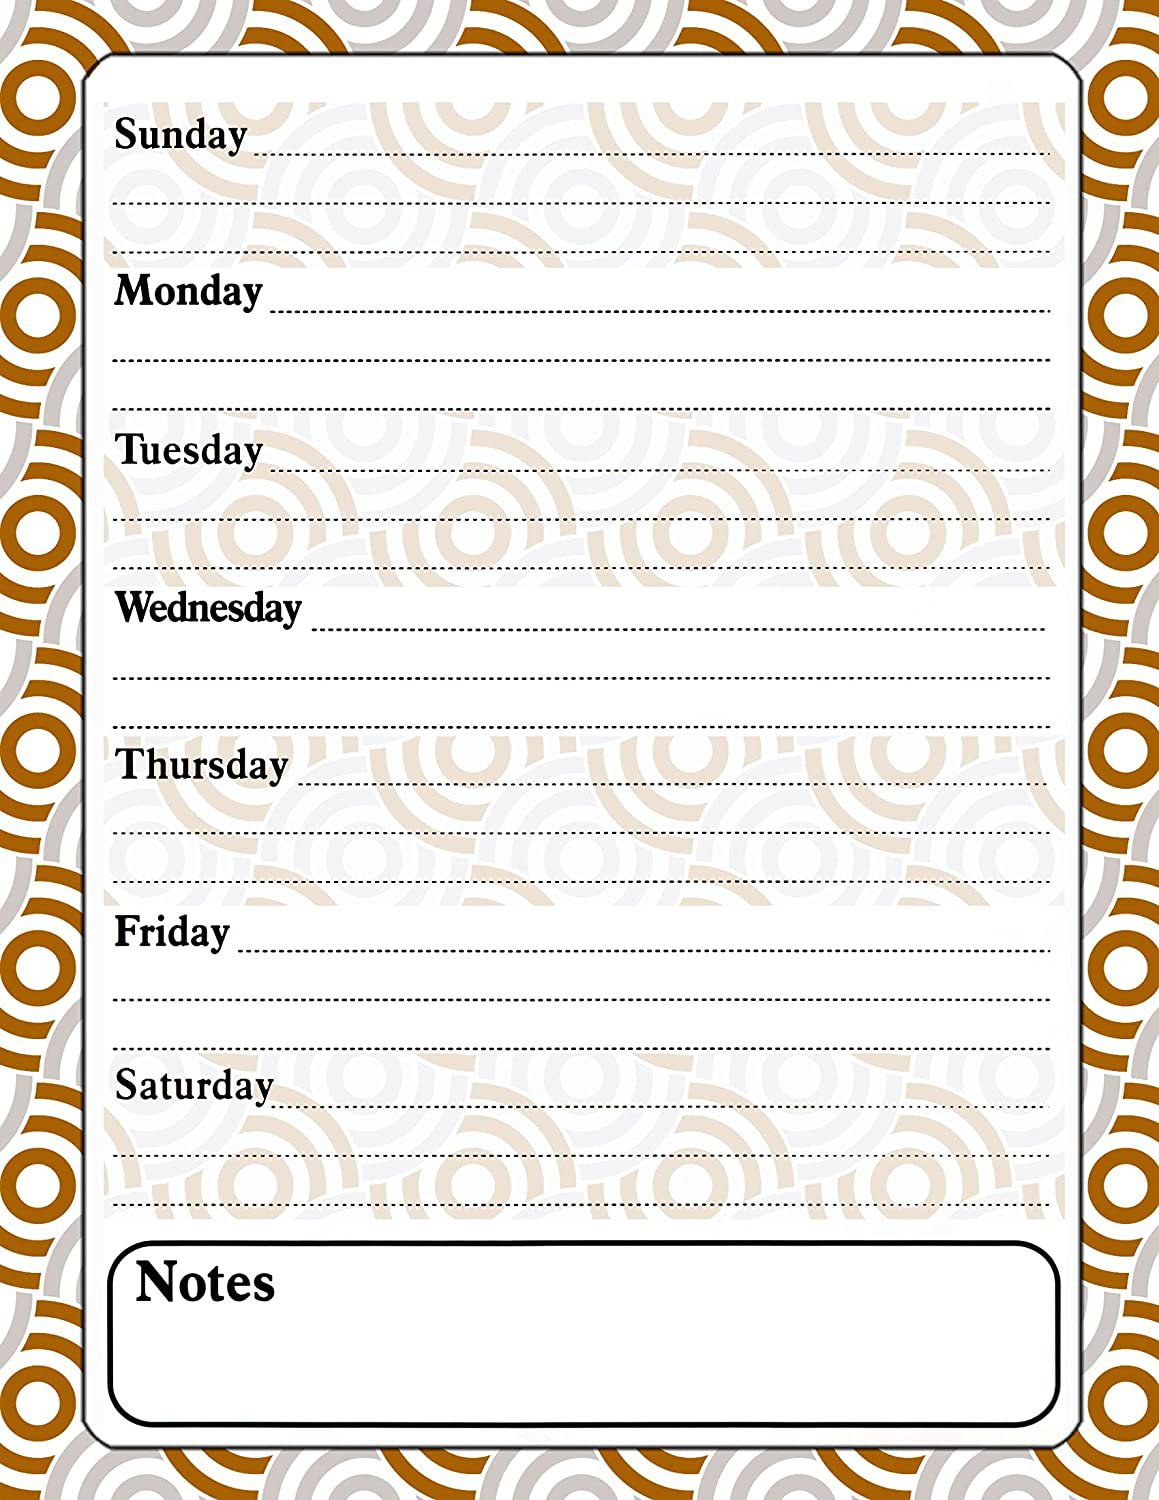 Magnetic Dry Erase Calendar - White Board Planner for Refrigerator / School Lockers - 3/07